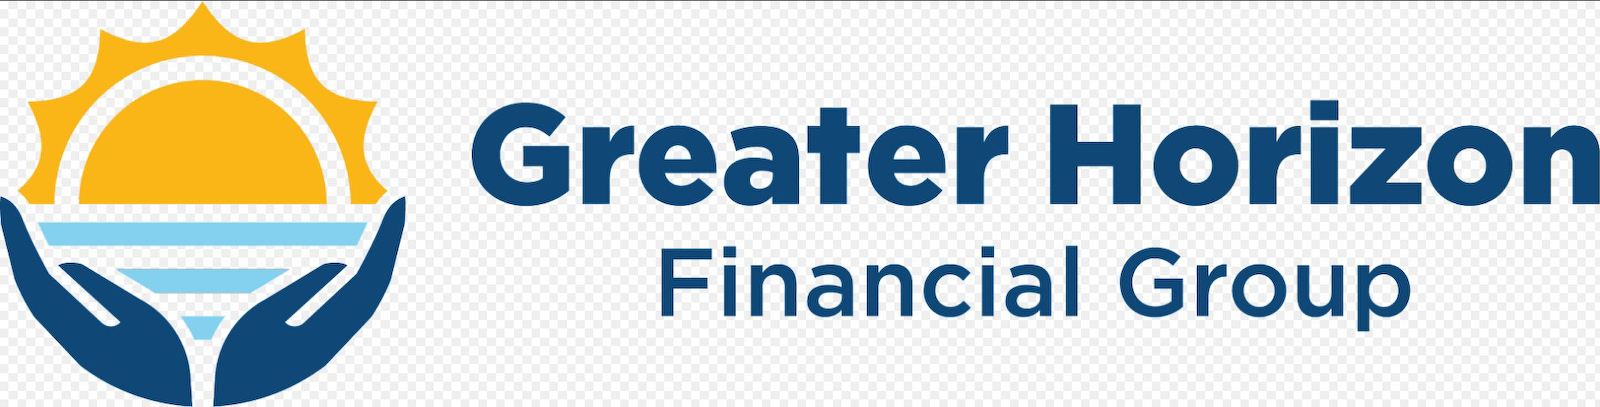 Greater Horizon Financial Group